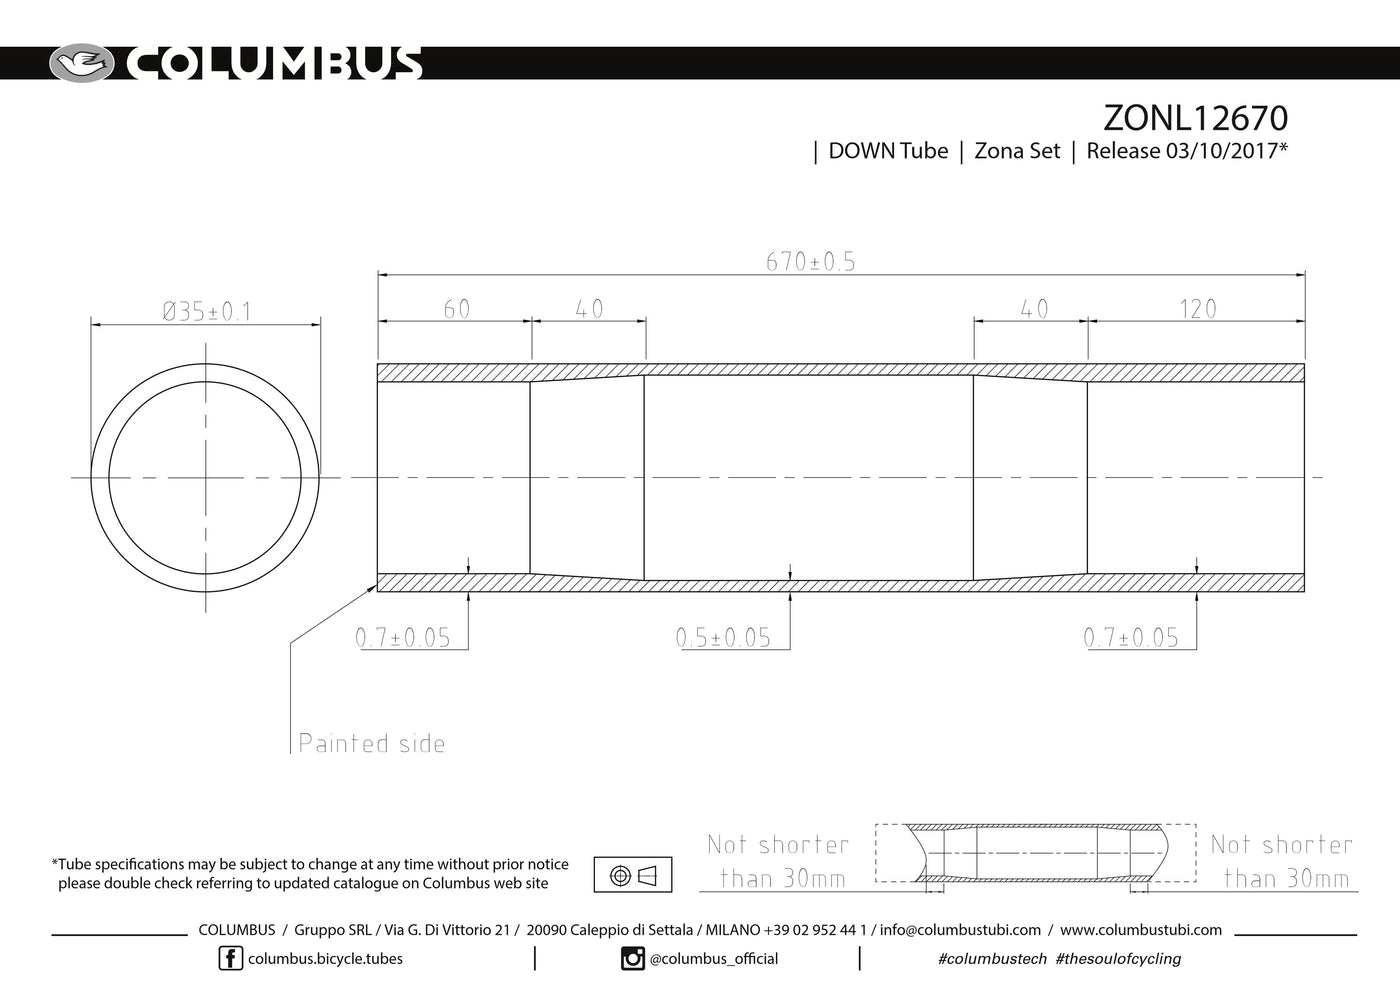 ZONL12670 - Columbus Tubing Zona down tube - 35 diameter - .7/.5/.7 wall thickness. Length = 670